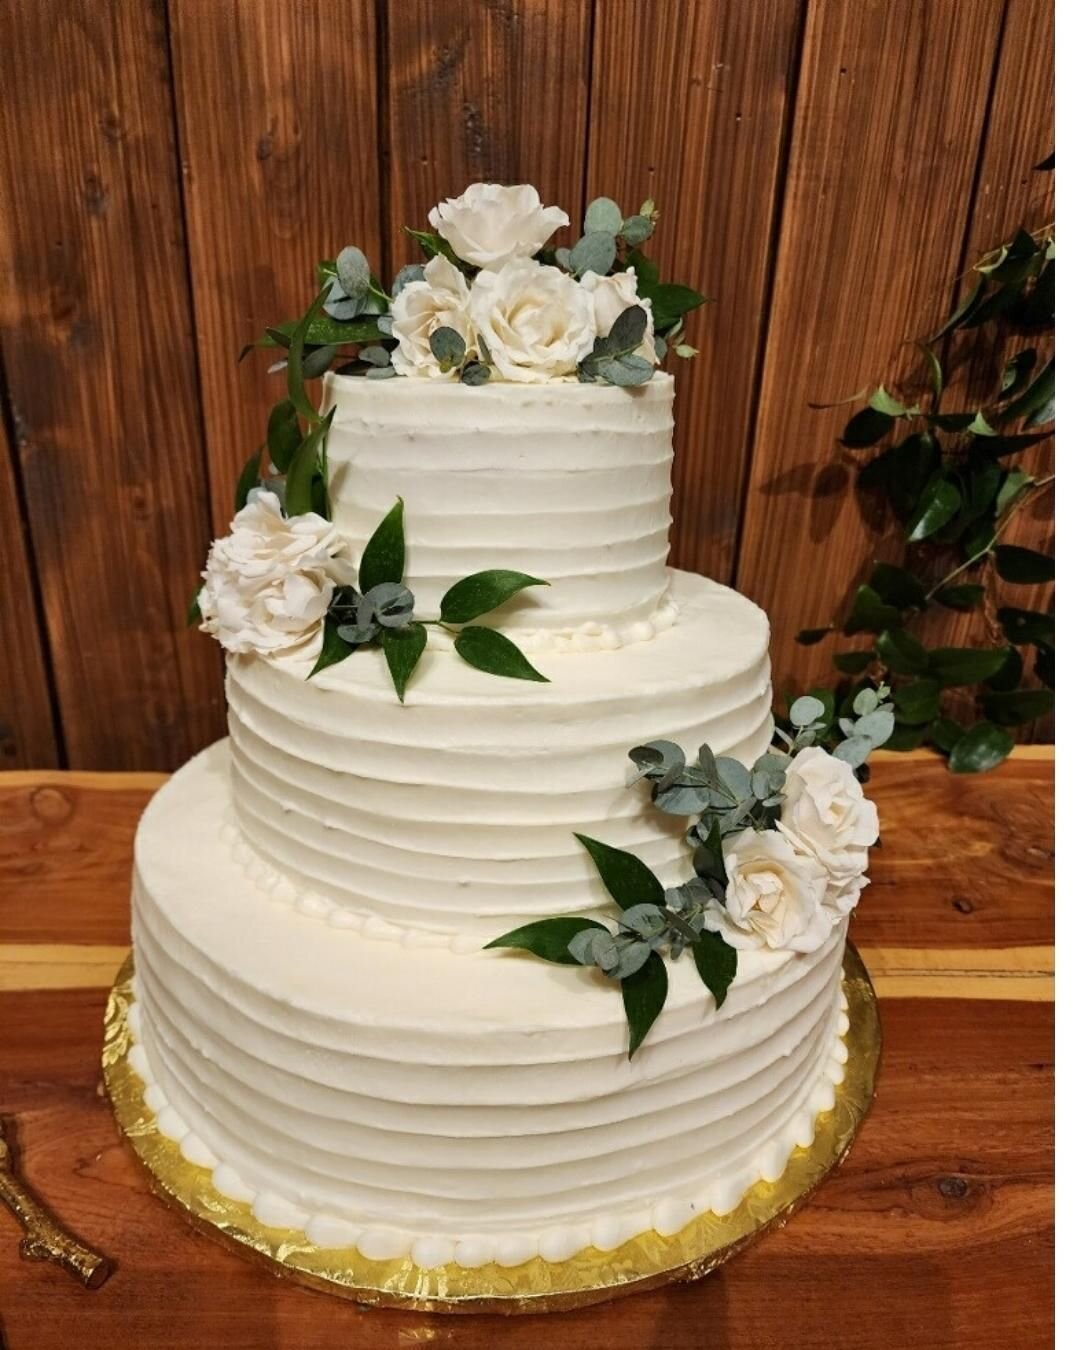 🤤 #cakesbycathyyoung #wedding #weddingcake #cake #cakedesign #cakedesigner #cakesofinstagram #sanantonioweddings #weddingsinsanantonio